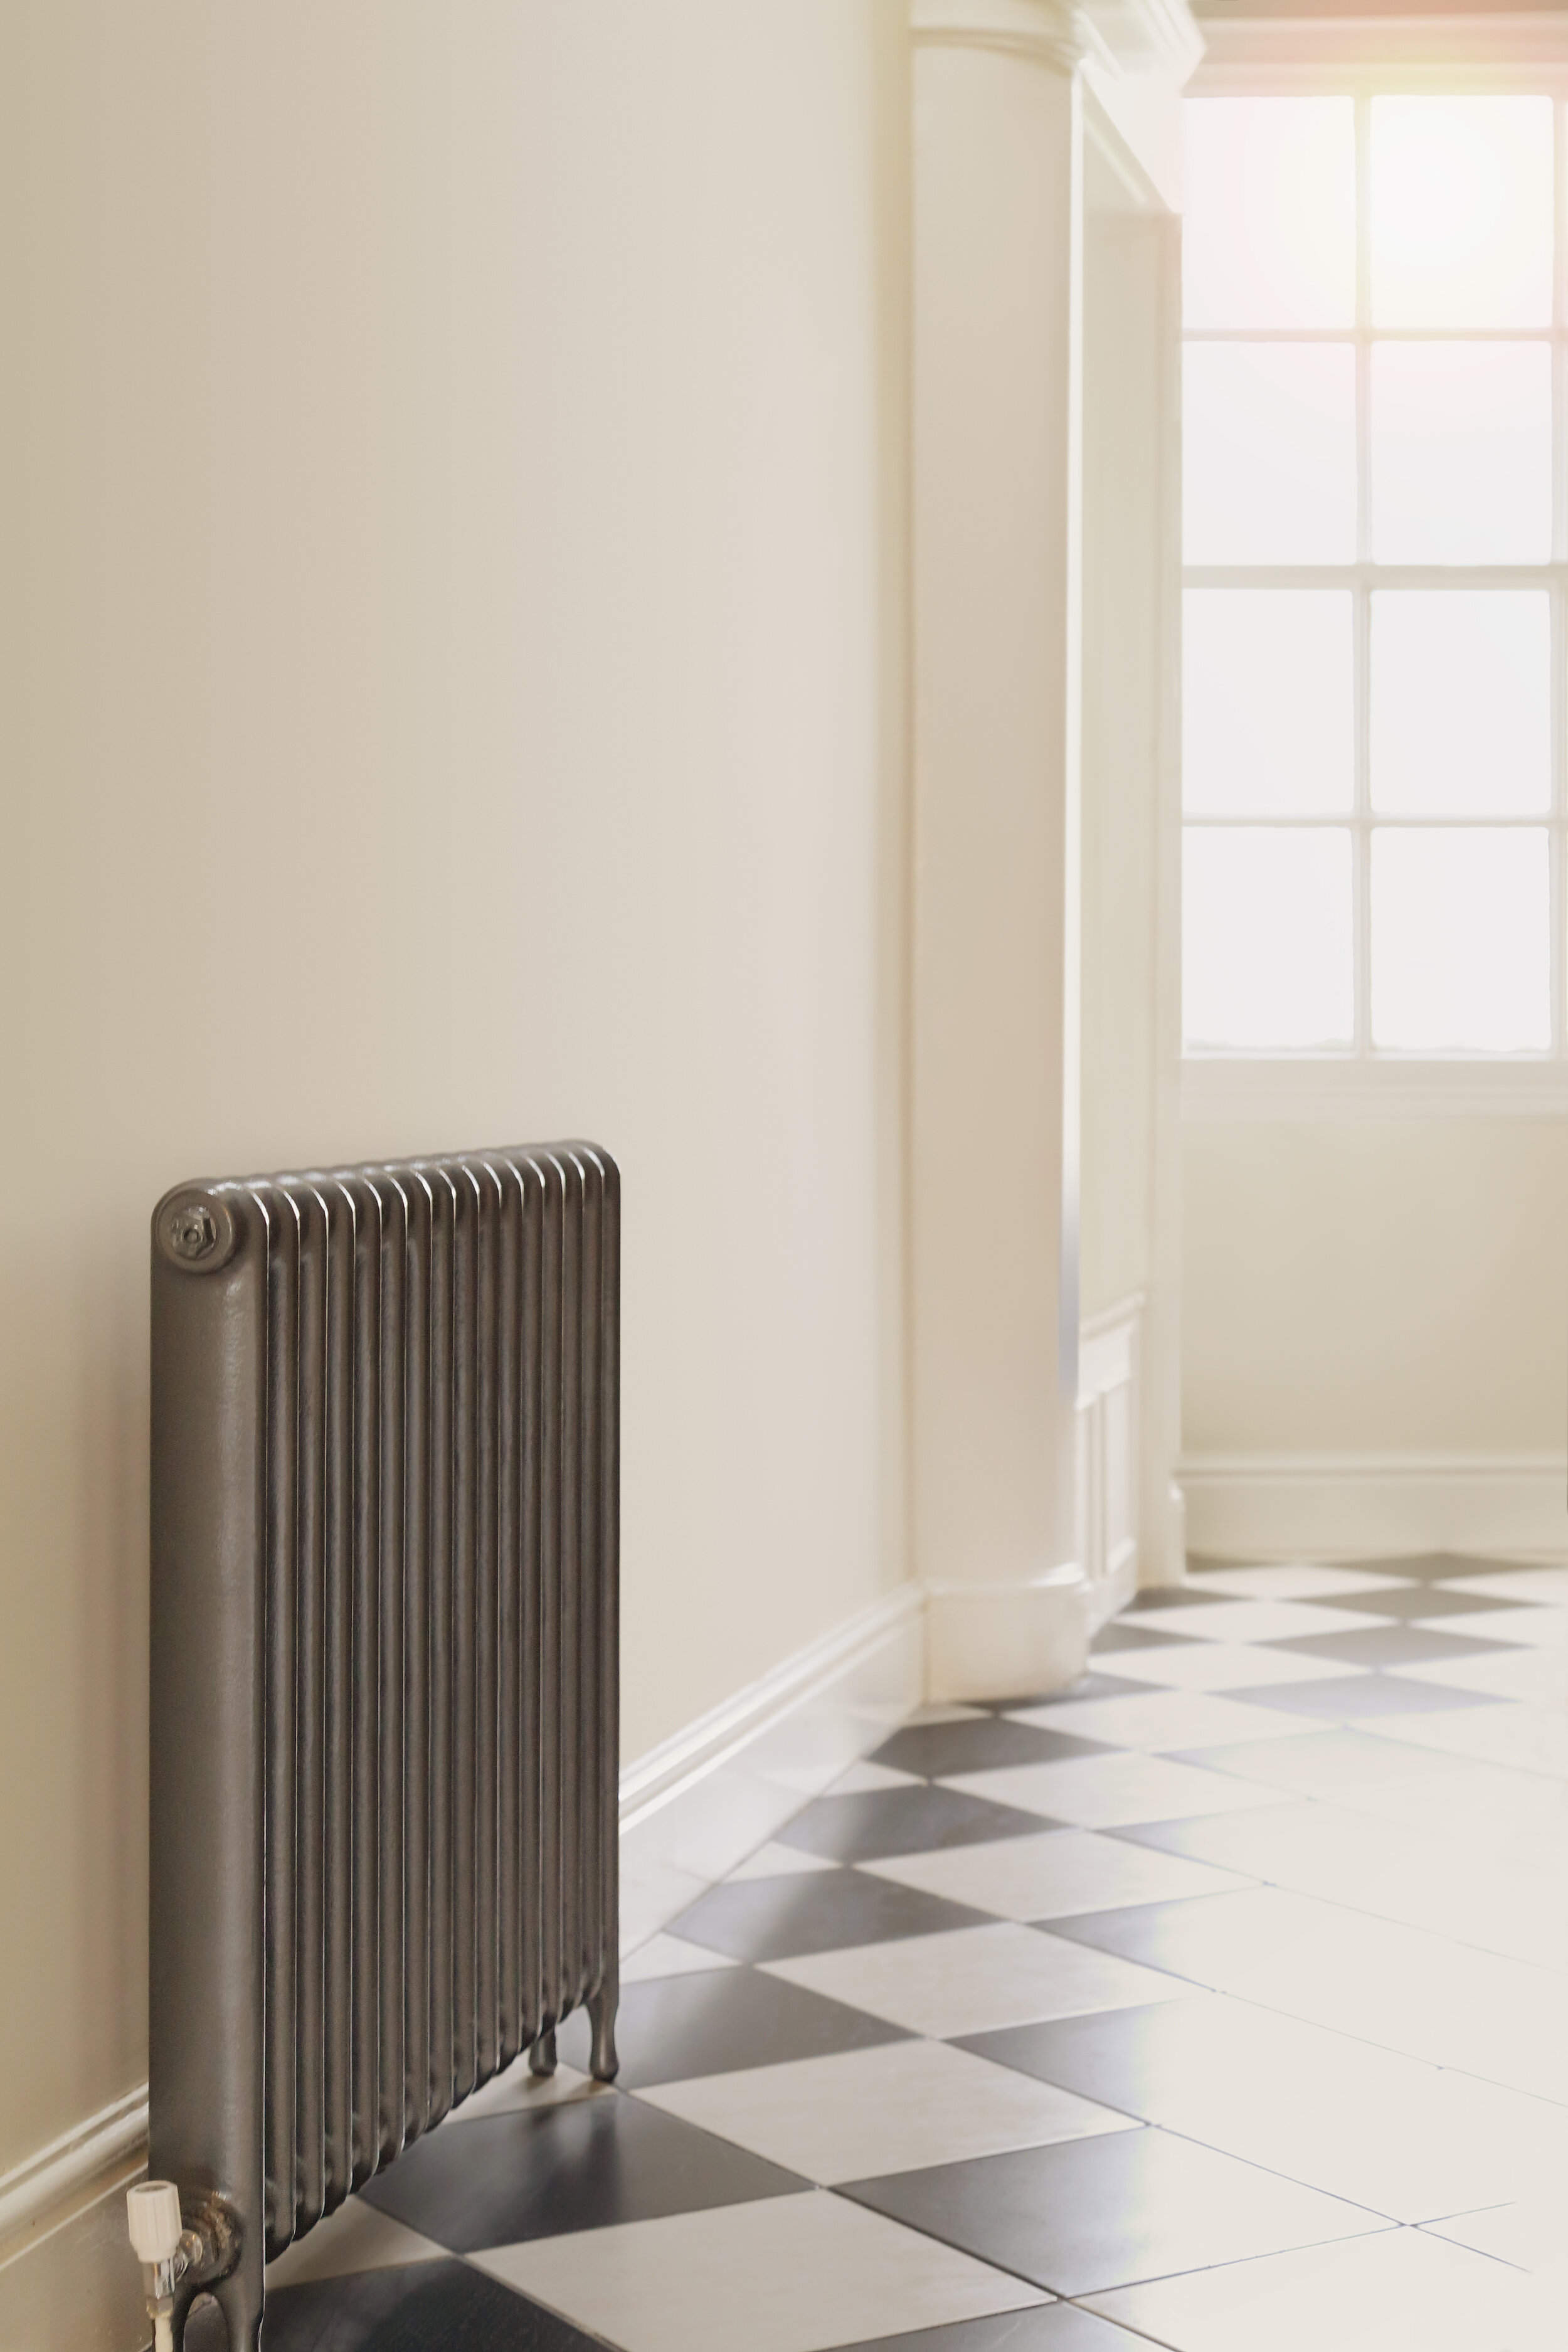  A narrow old school style cast iron radiator on a tiled hallway floor. A large window provides light 